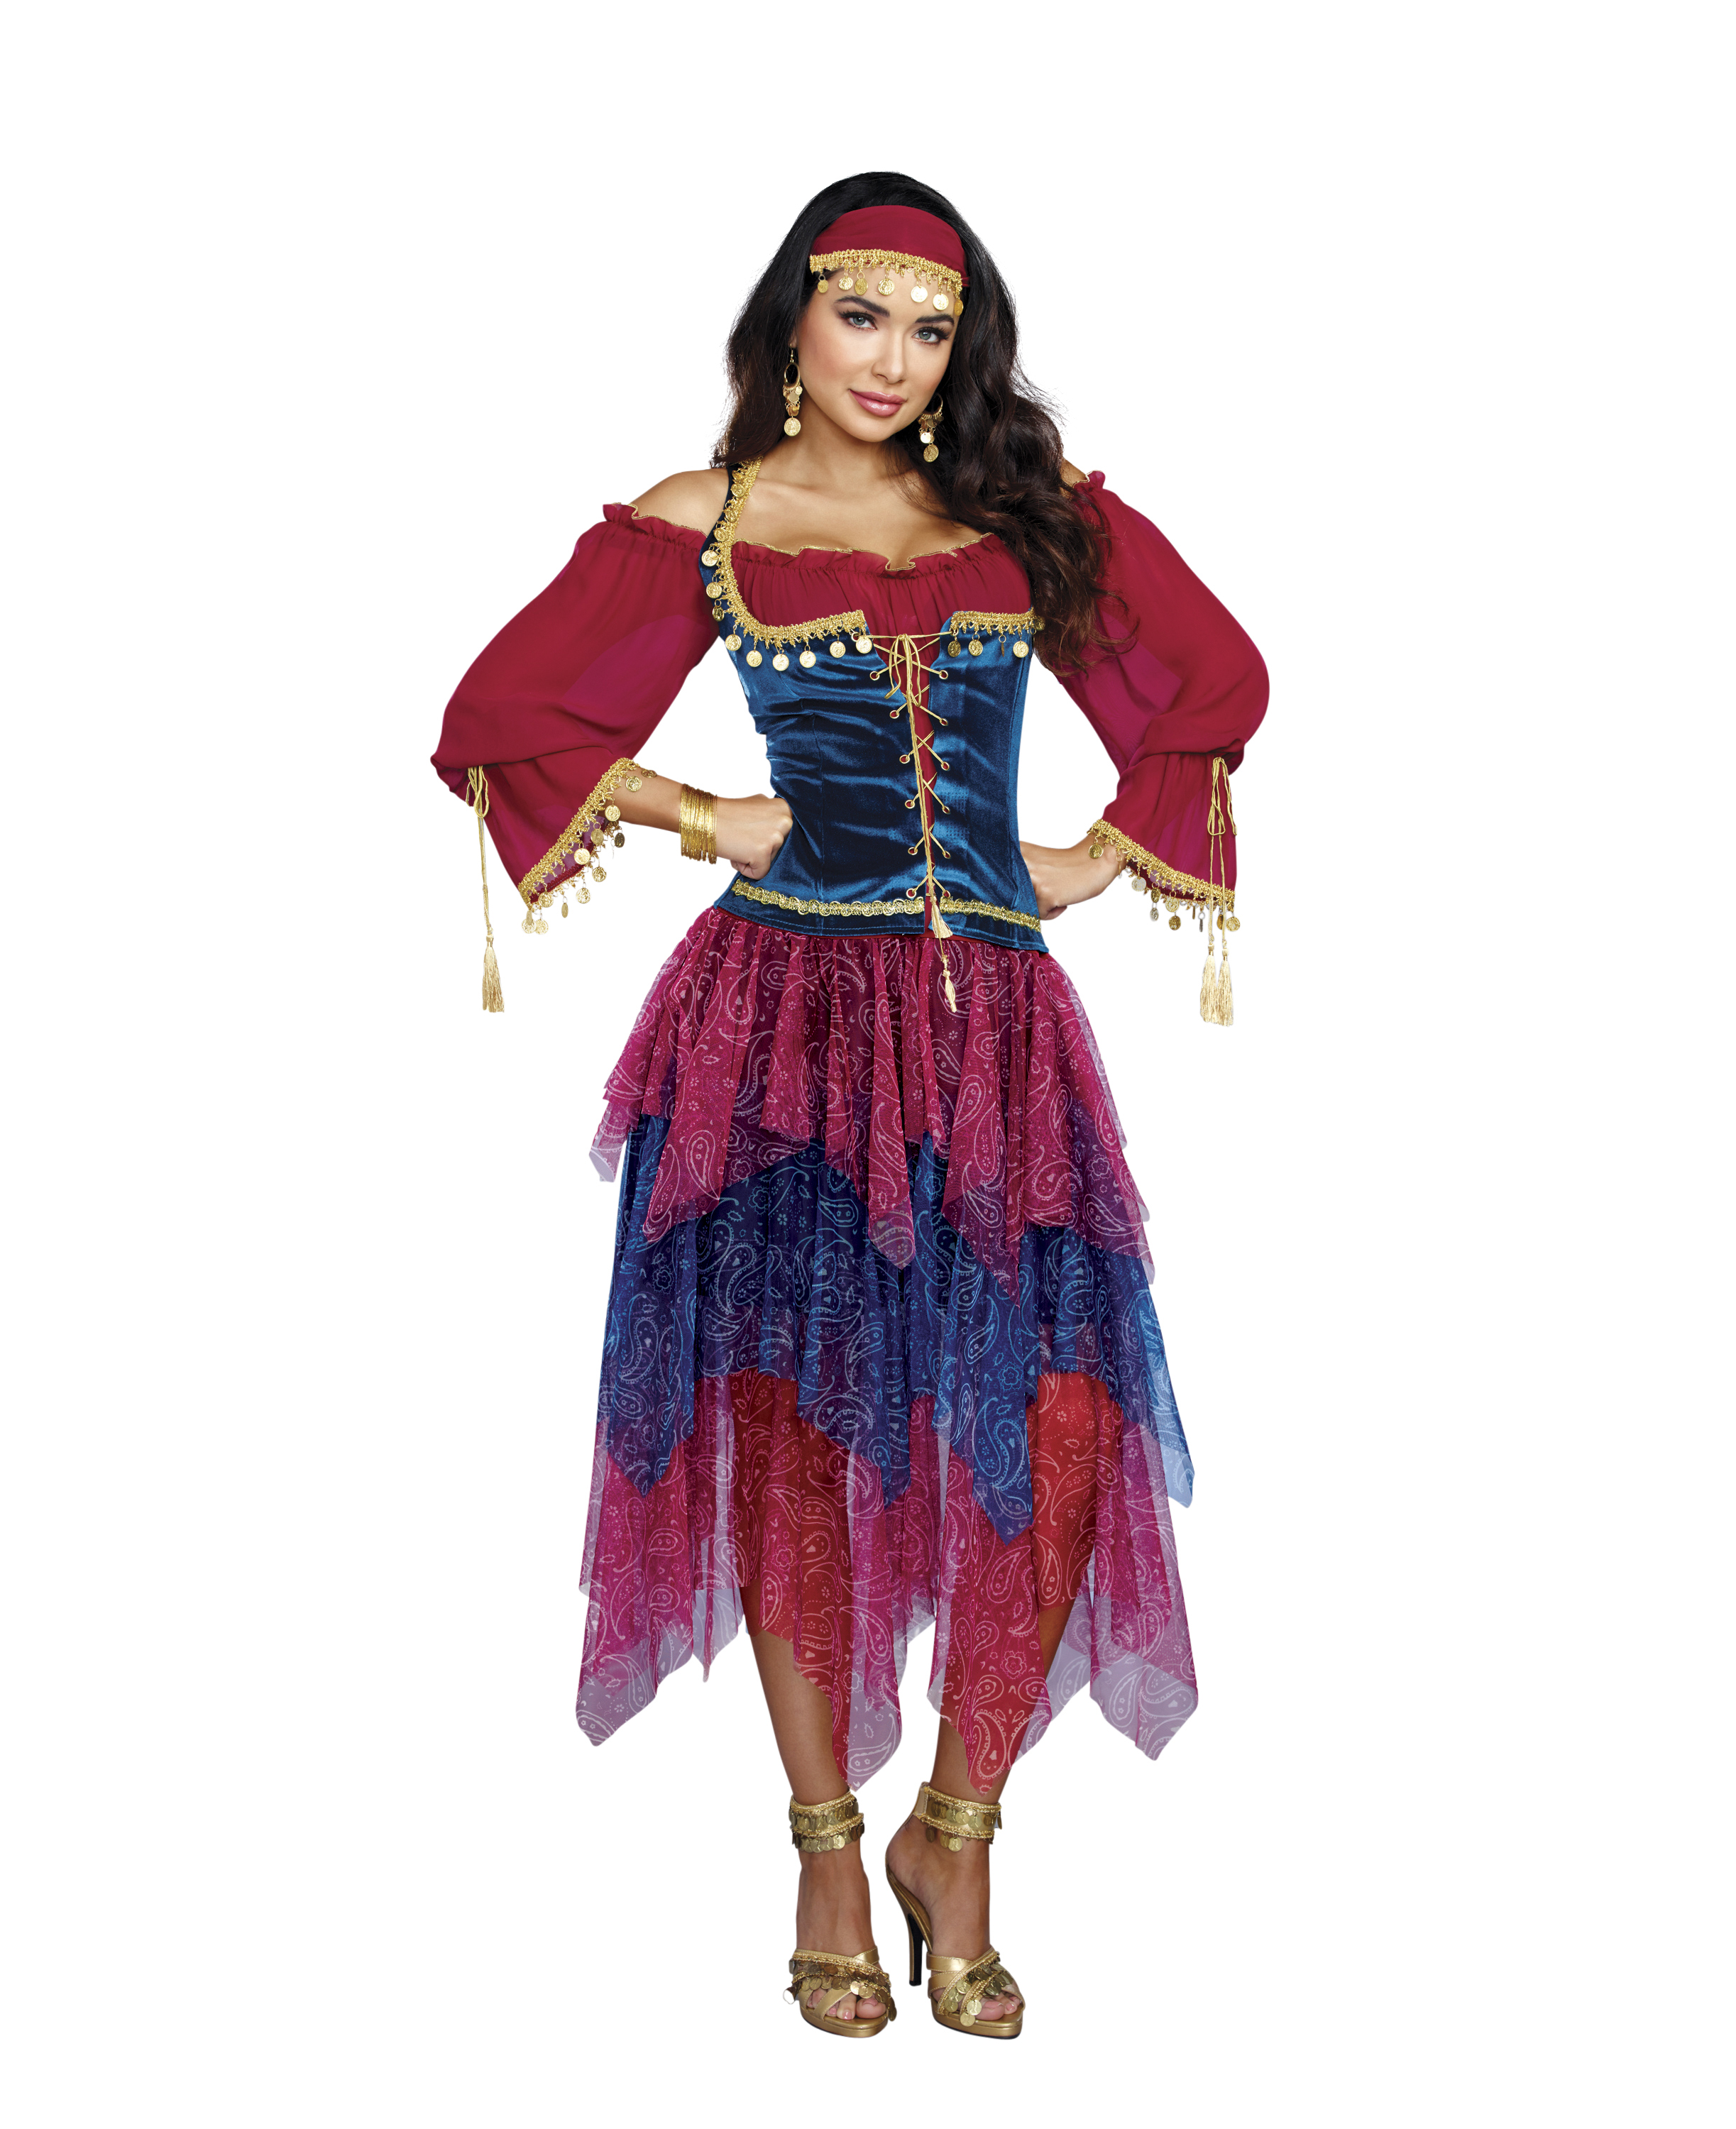 Dreamgirl Women's Gypsy Costume - image 1 of 5